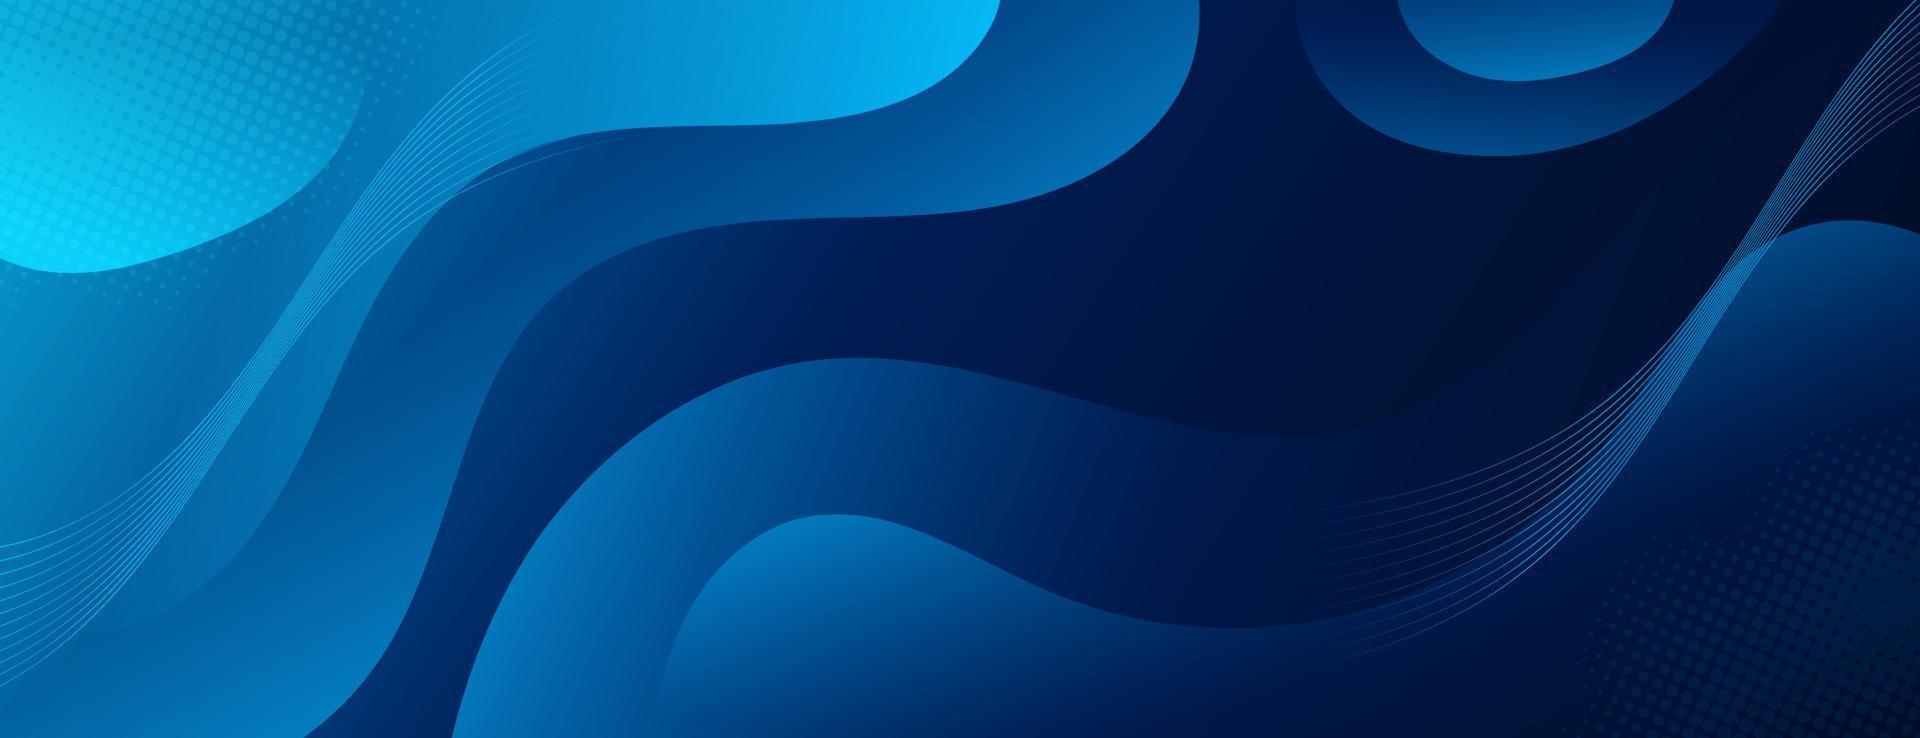 Abstract Gradient  dark blue  liquid Wave Background vector